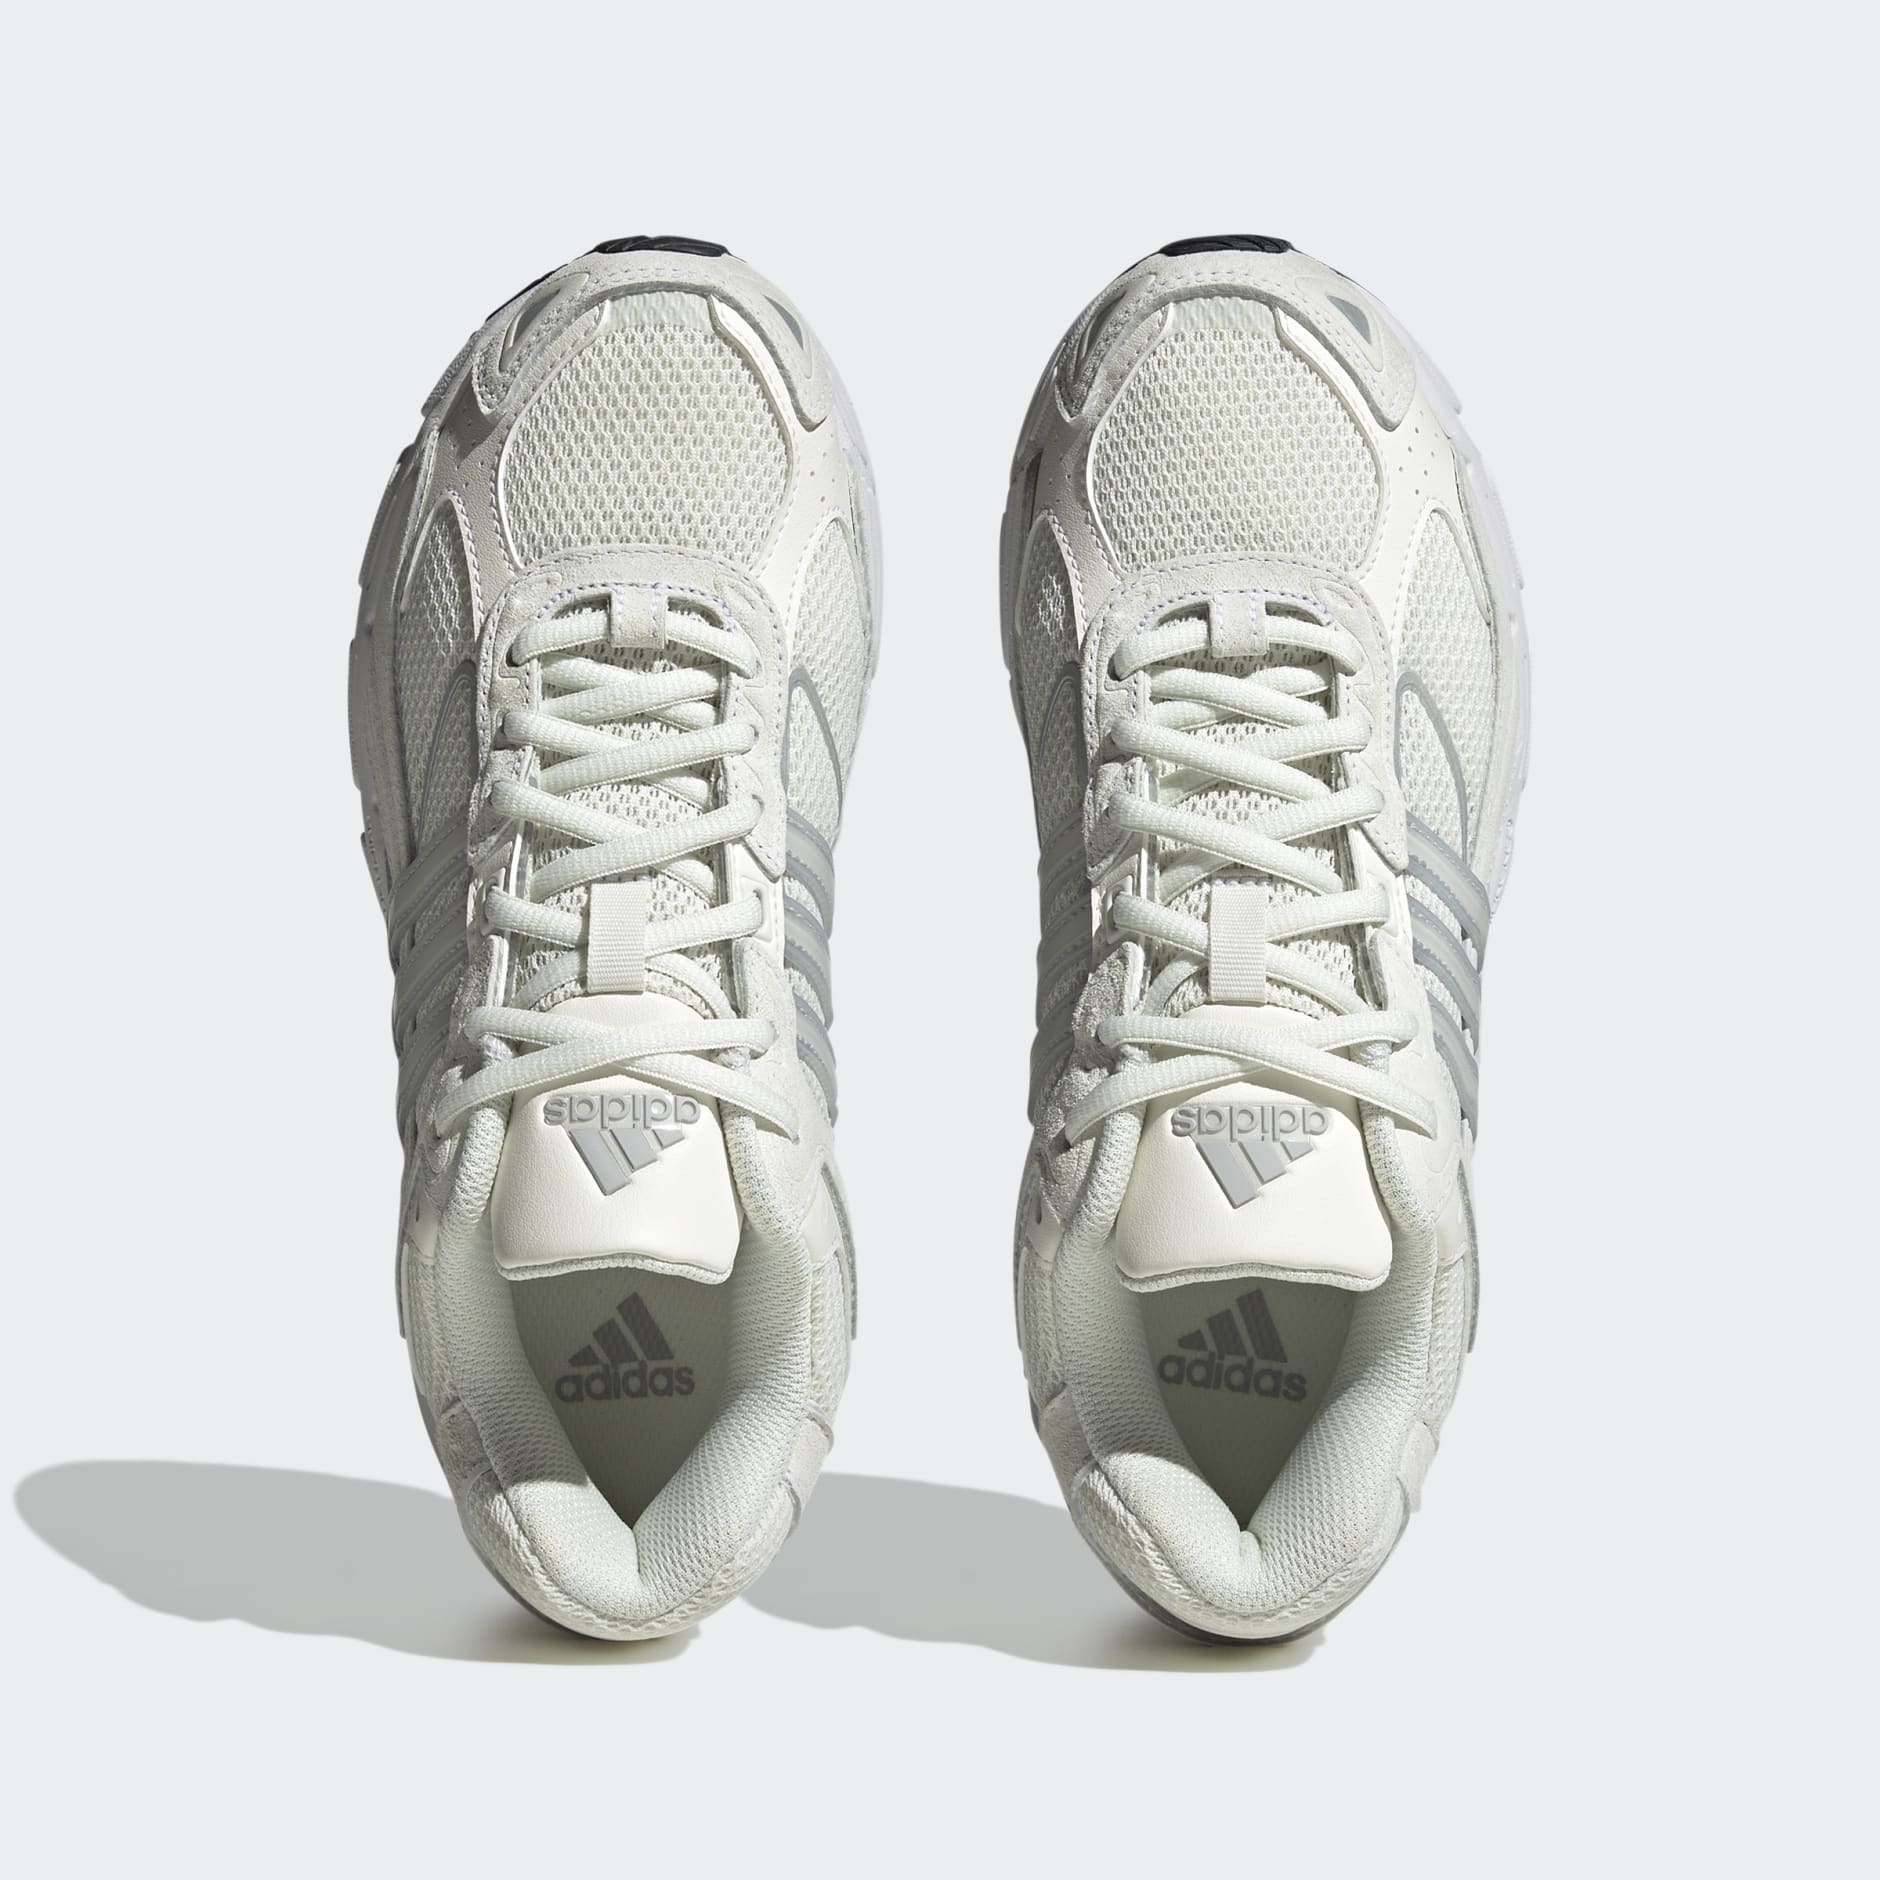 adidas Response CL adidas KE - Shoes | White